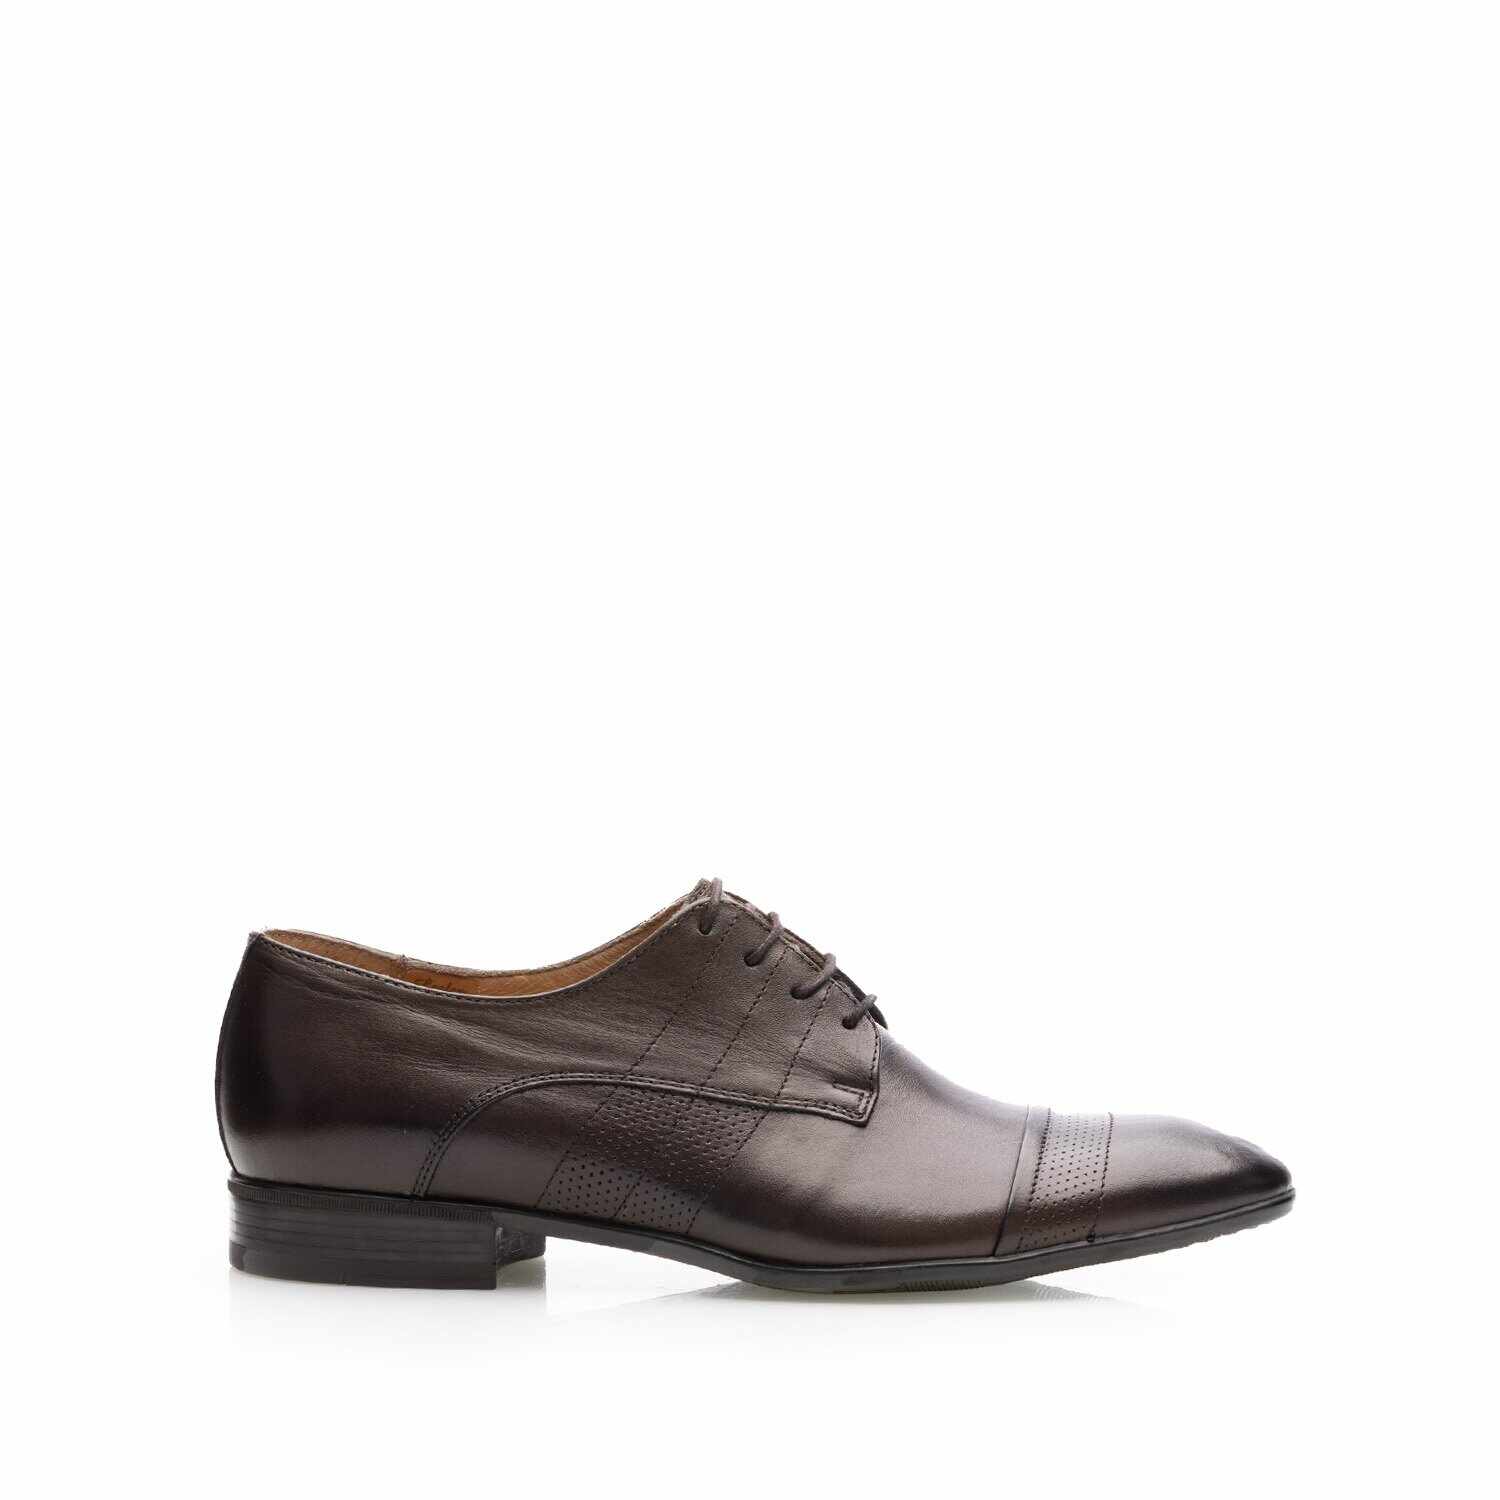 Pantofi eleganti barbati din piele naturala, Leofex - 115-2 Maro box